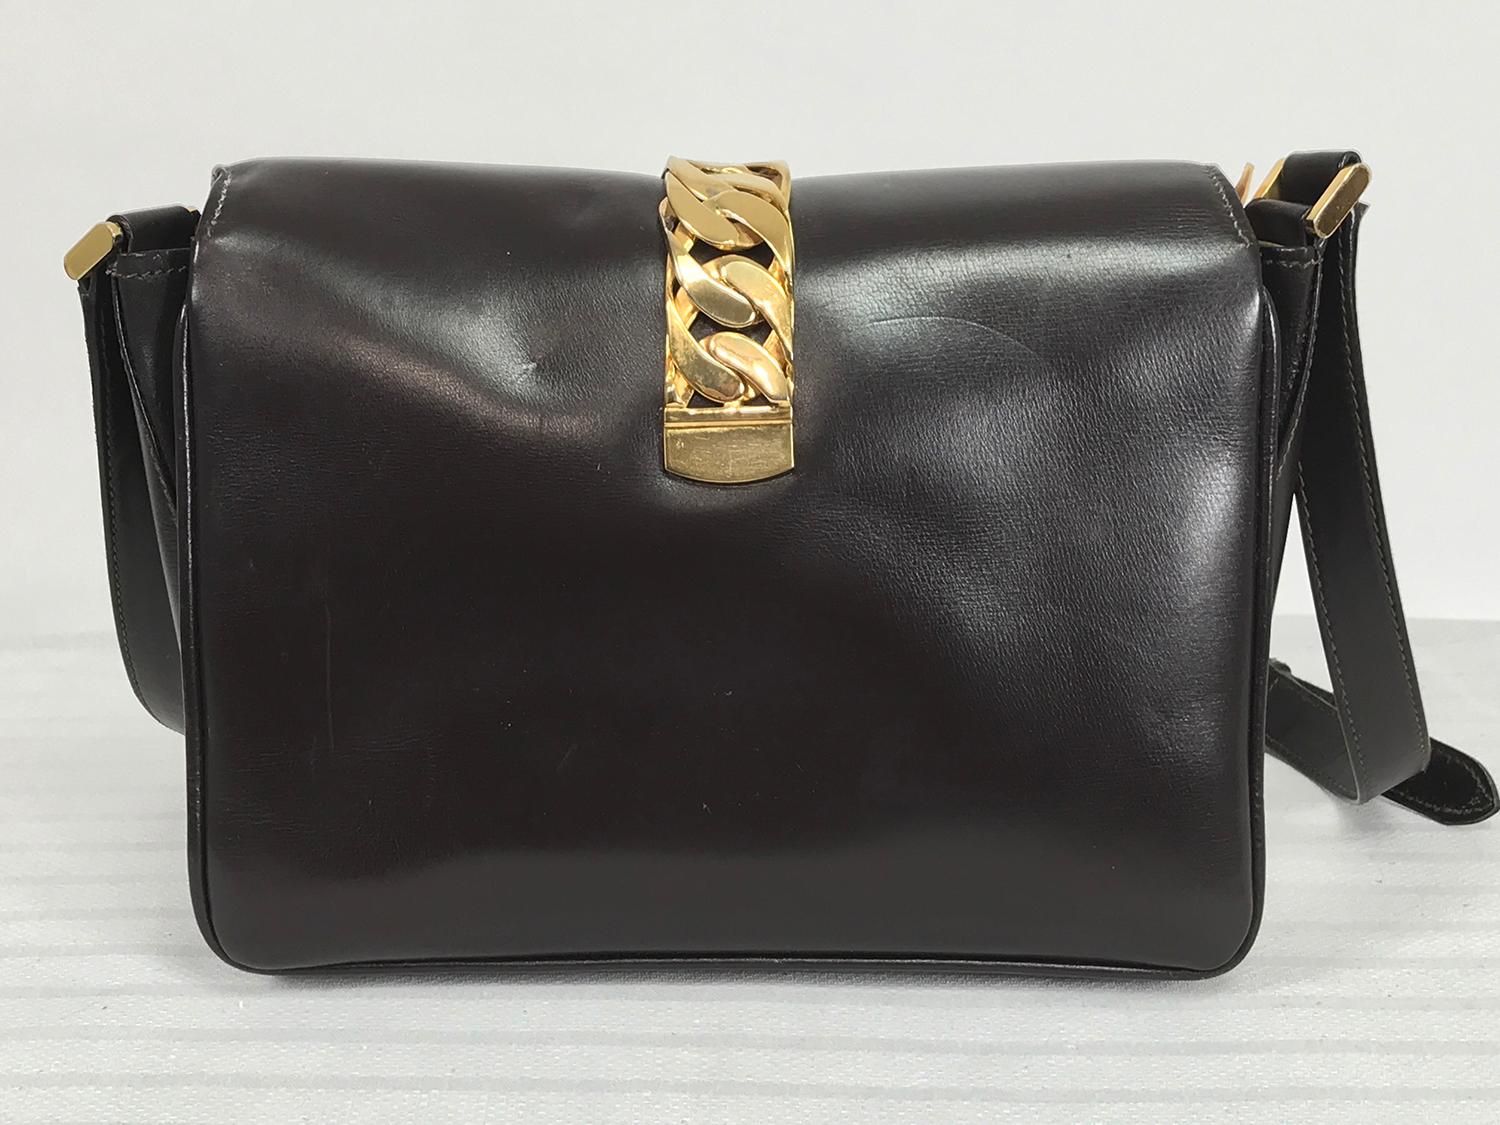 Gucci Original Sylvie Shoulder bag 1969 Chocolate Brown Leather & Gold Hardware For Sale 8